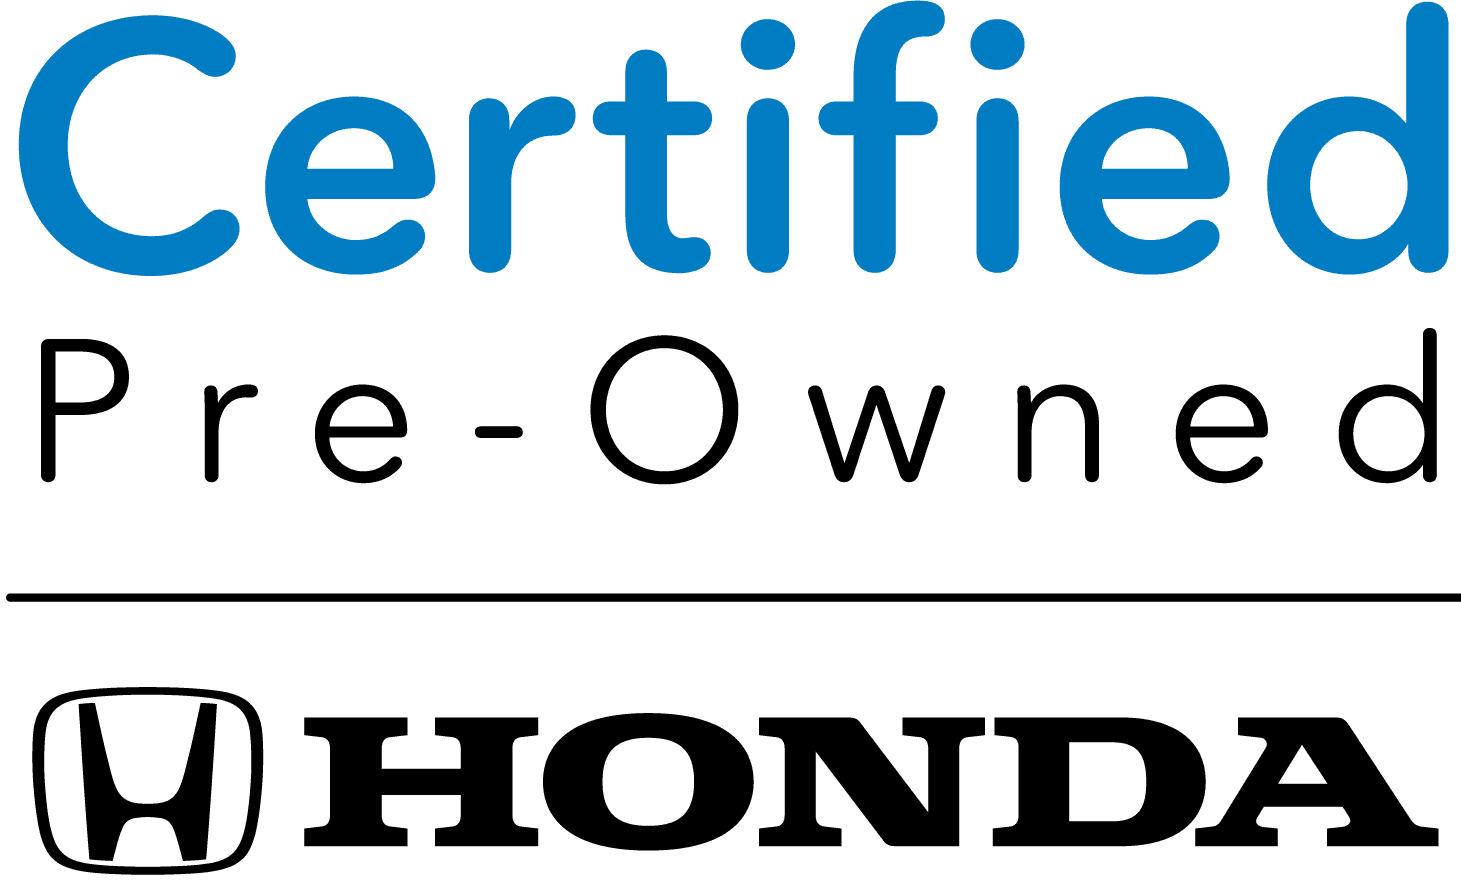 Honda Cpo2 02 - Hondas Certified, Transparent background PNG HD thumbnail